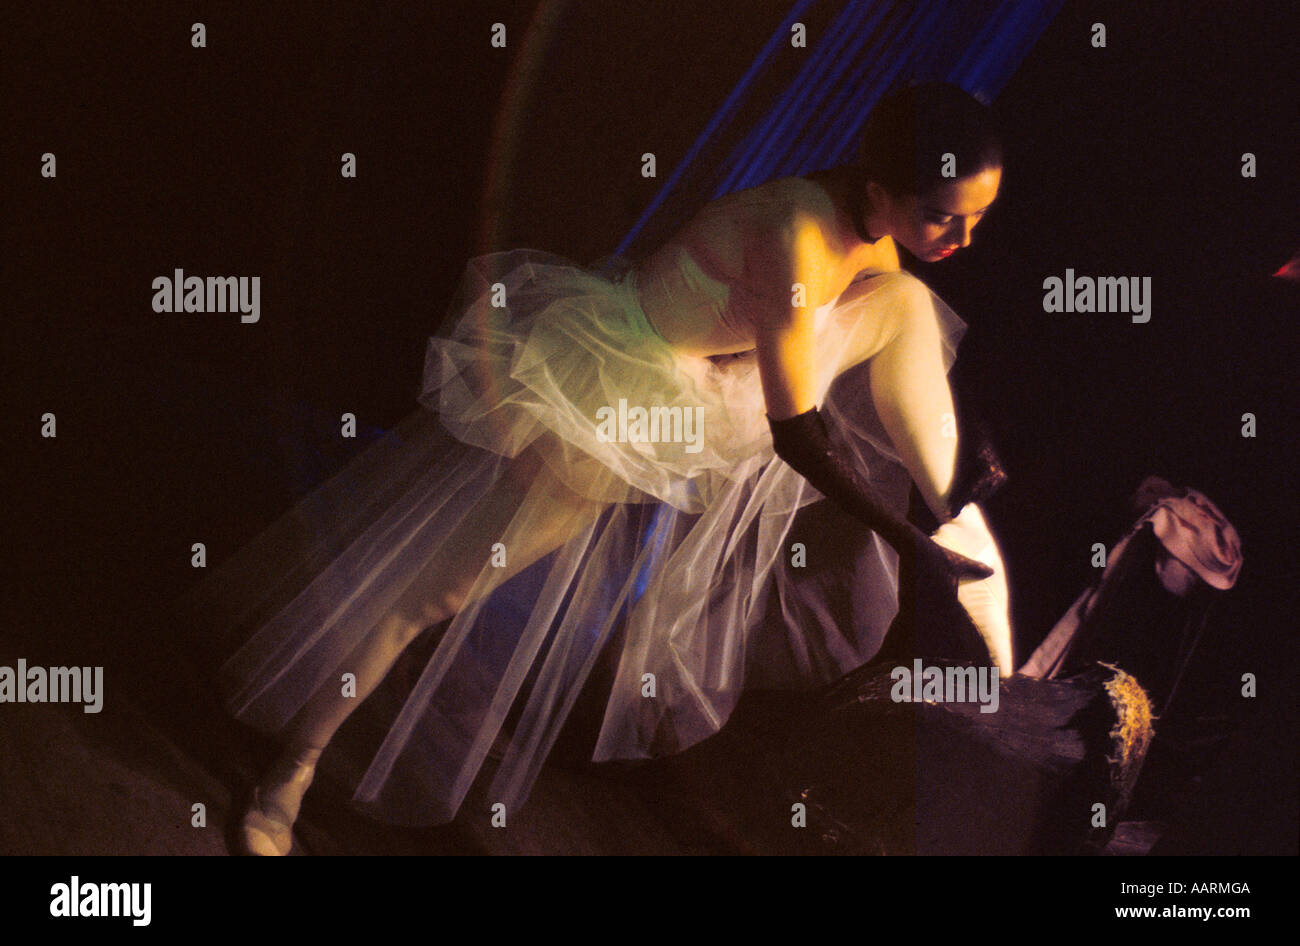 BOLSHOI THEATRE MOSCOW IRINA ZIBROVA A YOUNG CORPS DE BALLET DANCER BACKSTAGE TYING UP HER BALLET SHOE 1995 Stock Photo